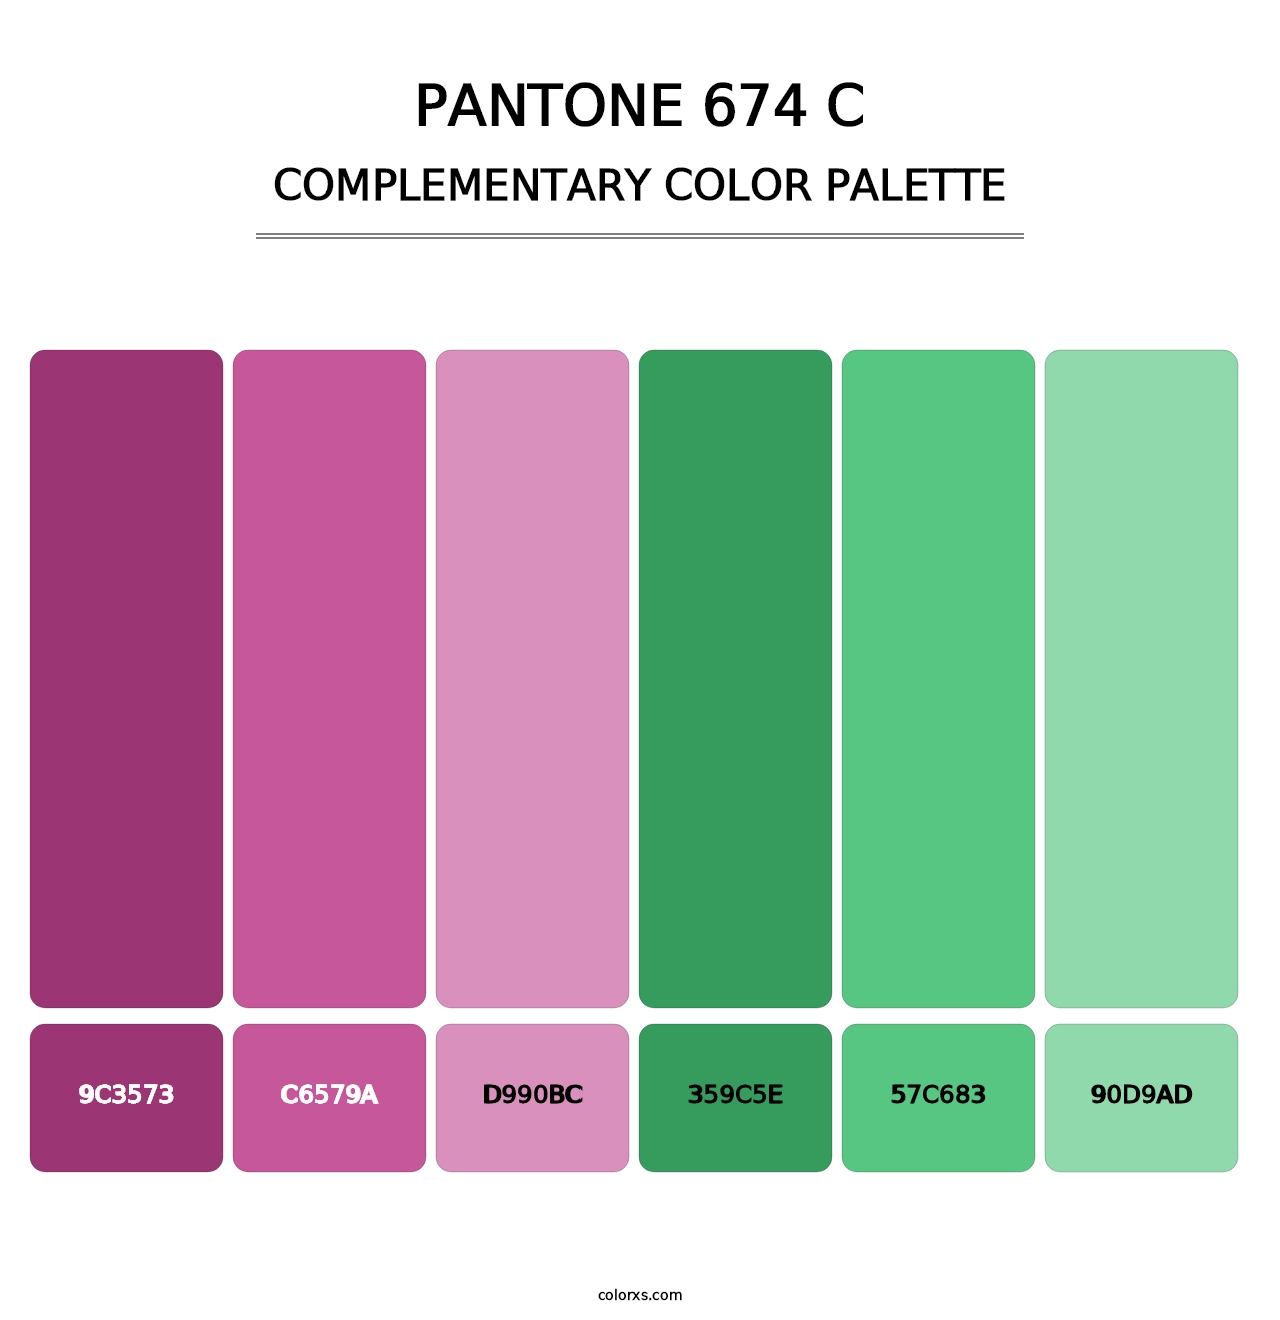 PANTONE 674 C - Complementary Color Palette